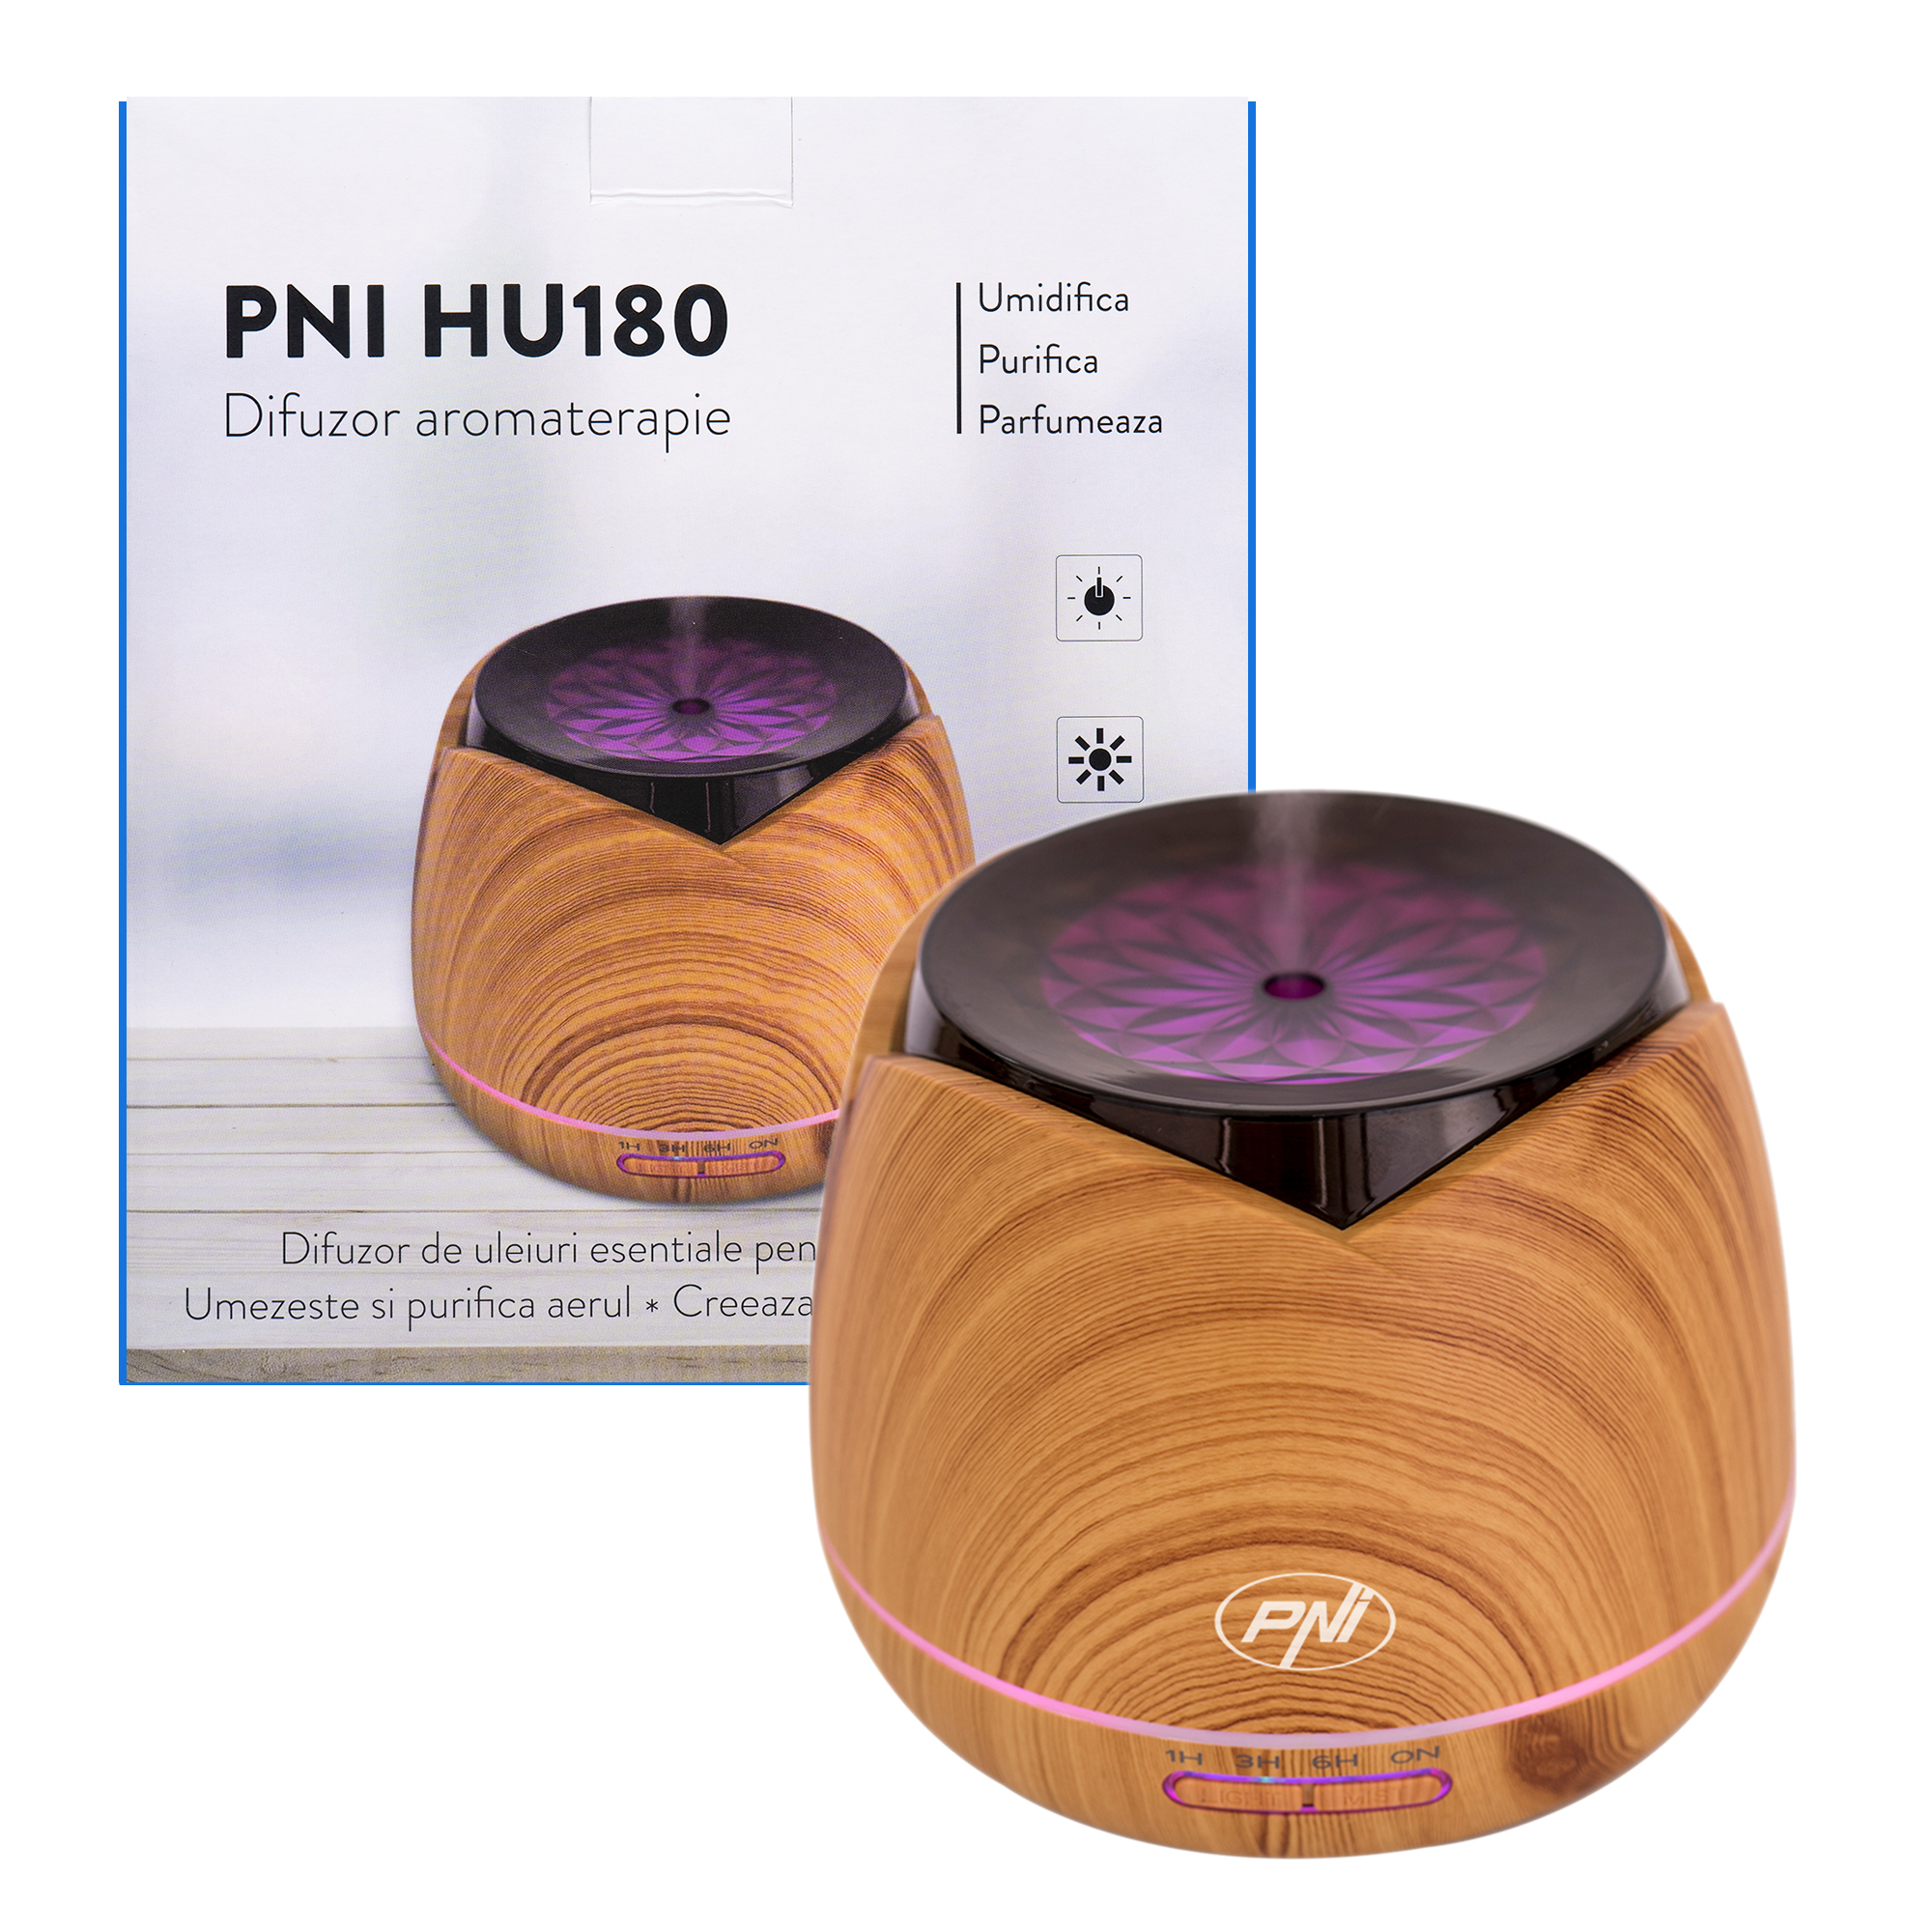 Difuzor aromaterapie PNI HU180 pentru uleiuri esentiale, cu ultrasunete, 400 ml, timer, 7 culori LED, inchidere automata, Wood Grain